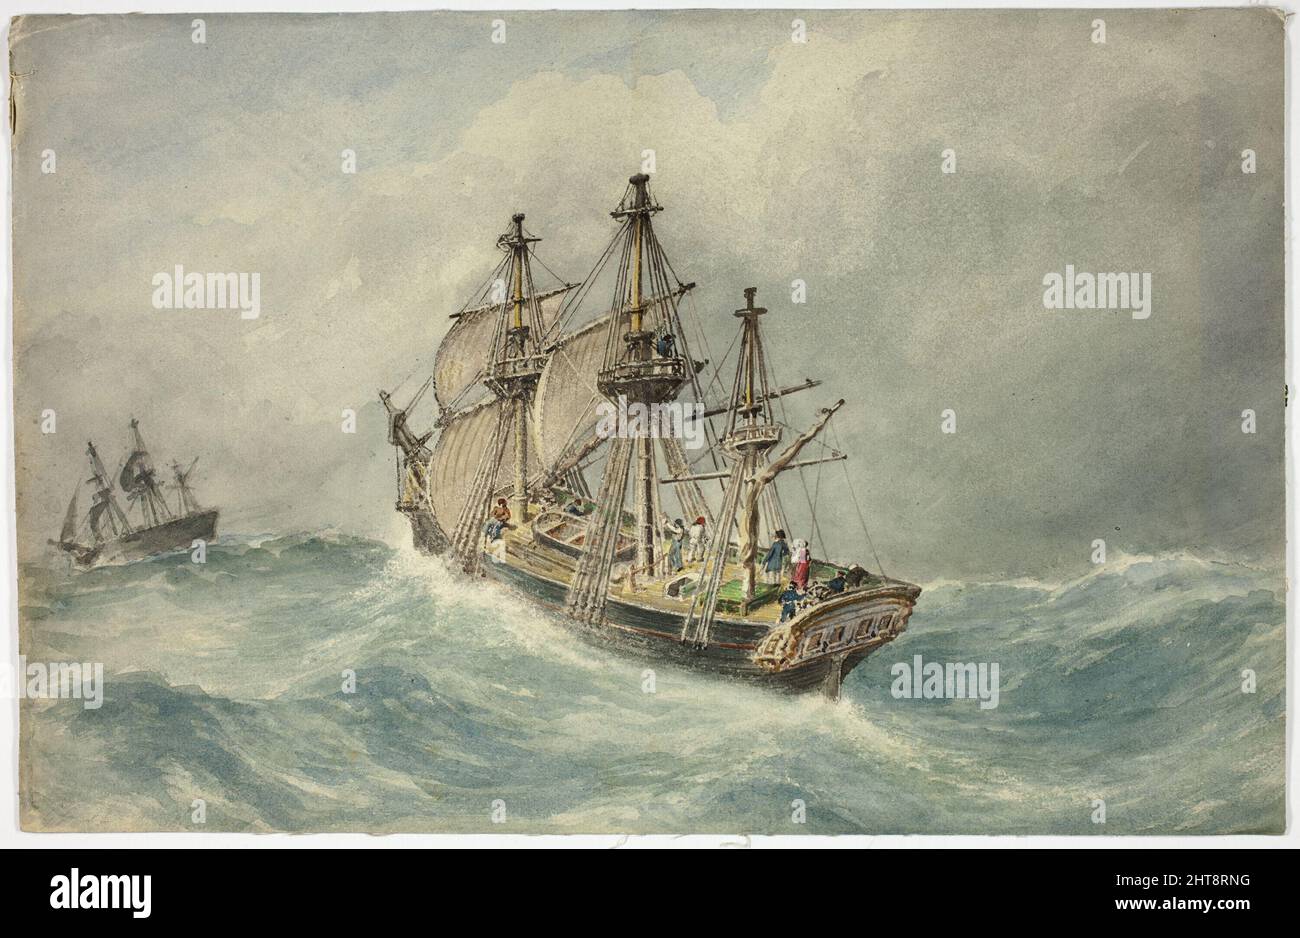 Two Three-Mast Ships on Stormy Sea, 1800-1899. Stock Photo